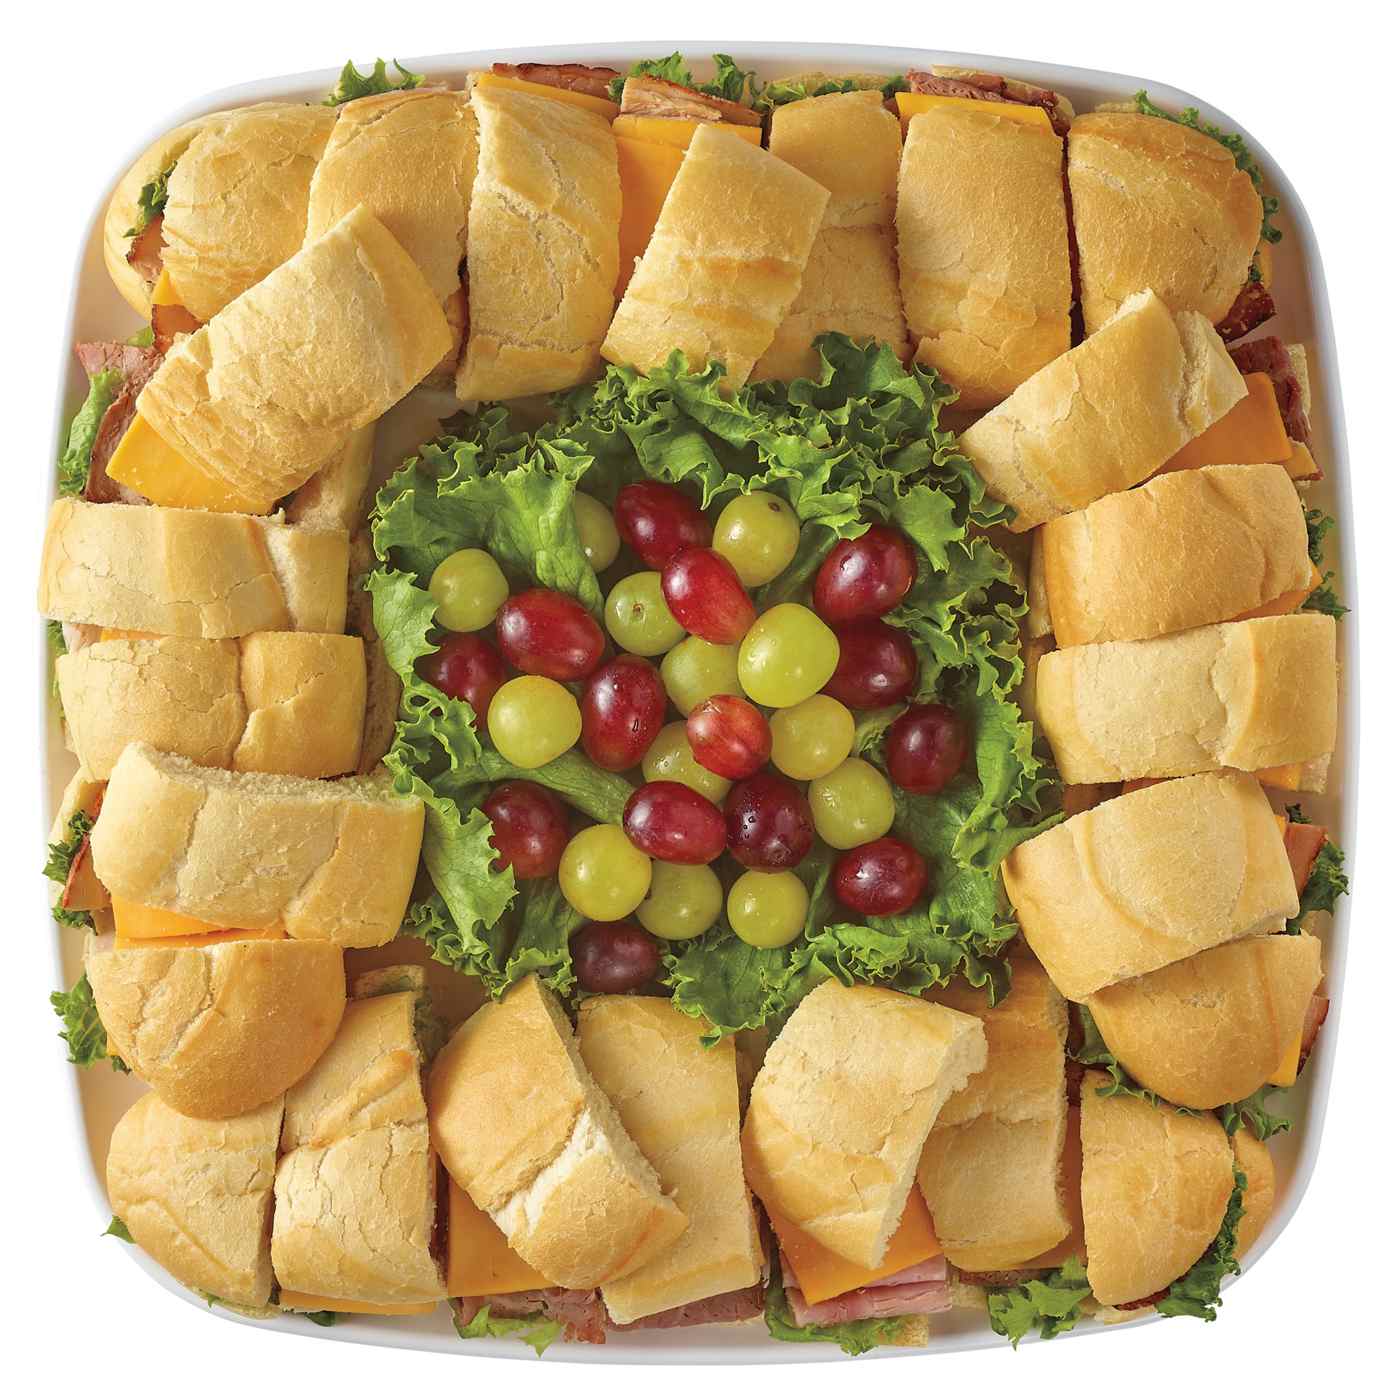 H-E-B Deli Party Tray - Assorted Sub Sandwiches; image 2 of 2